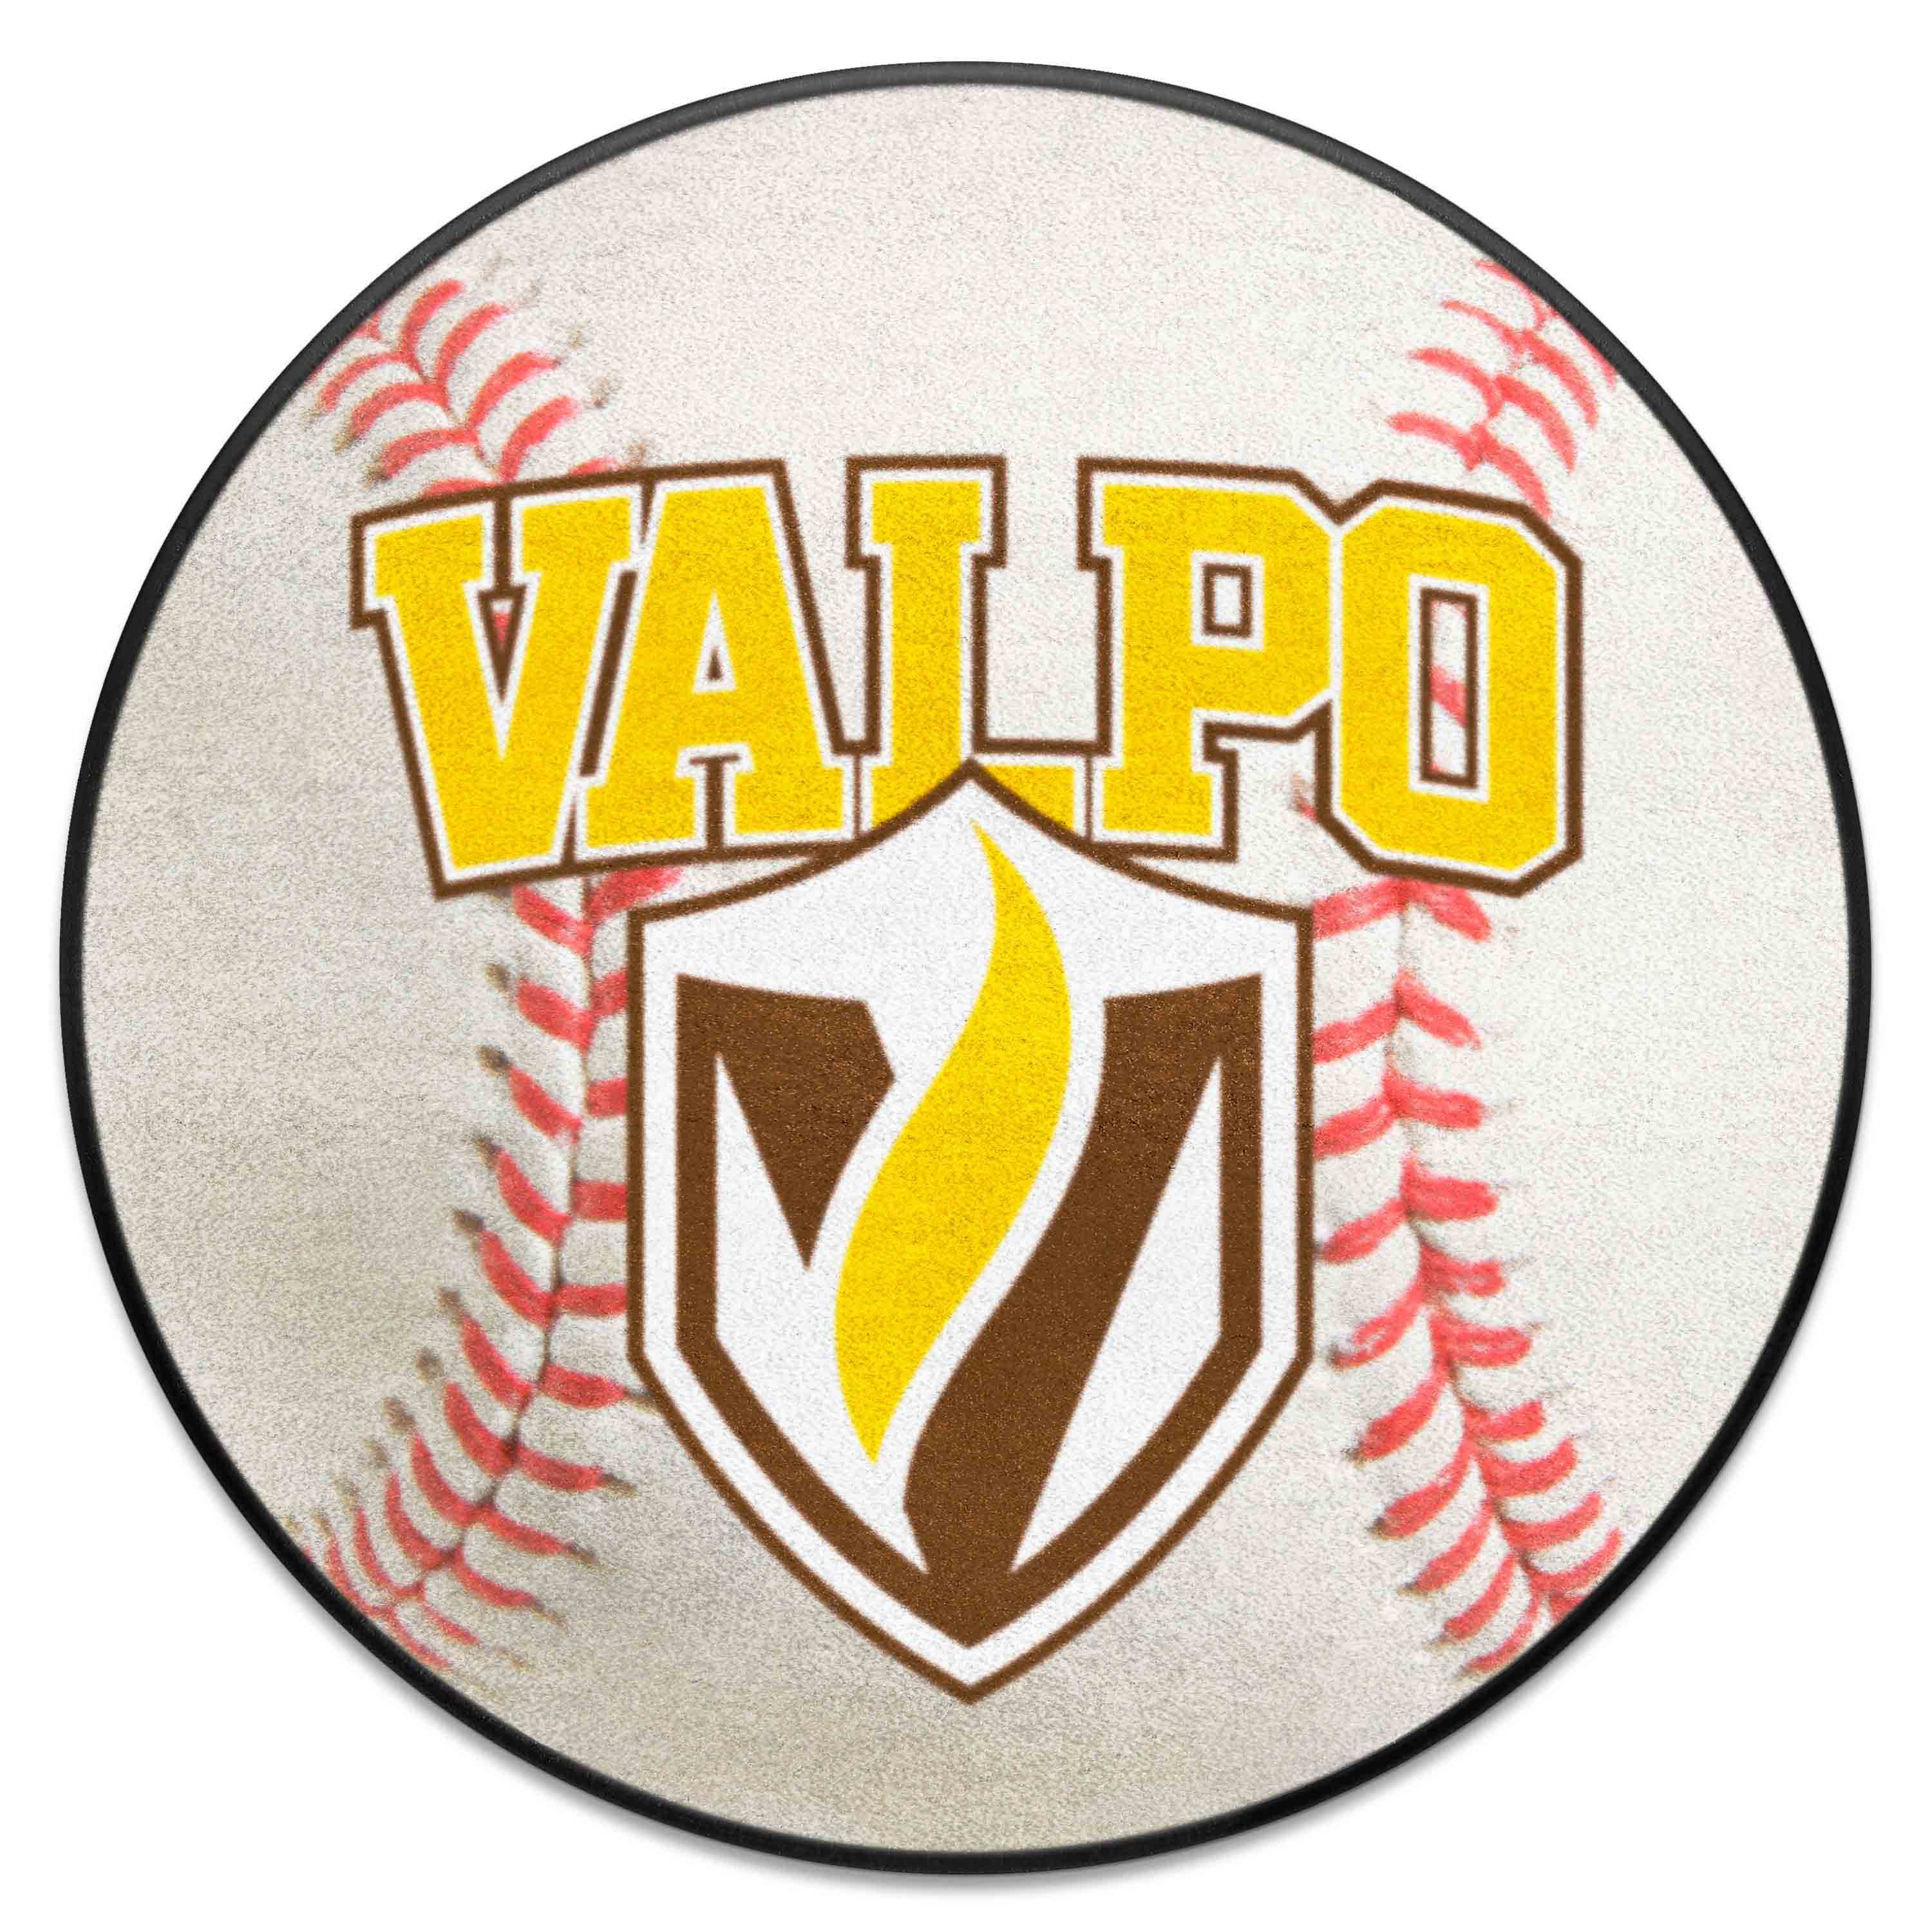 Valparaiso Baseball Mat 27" diameter - image 1 of 2